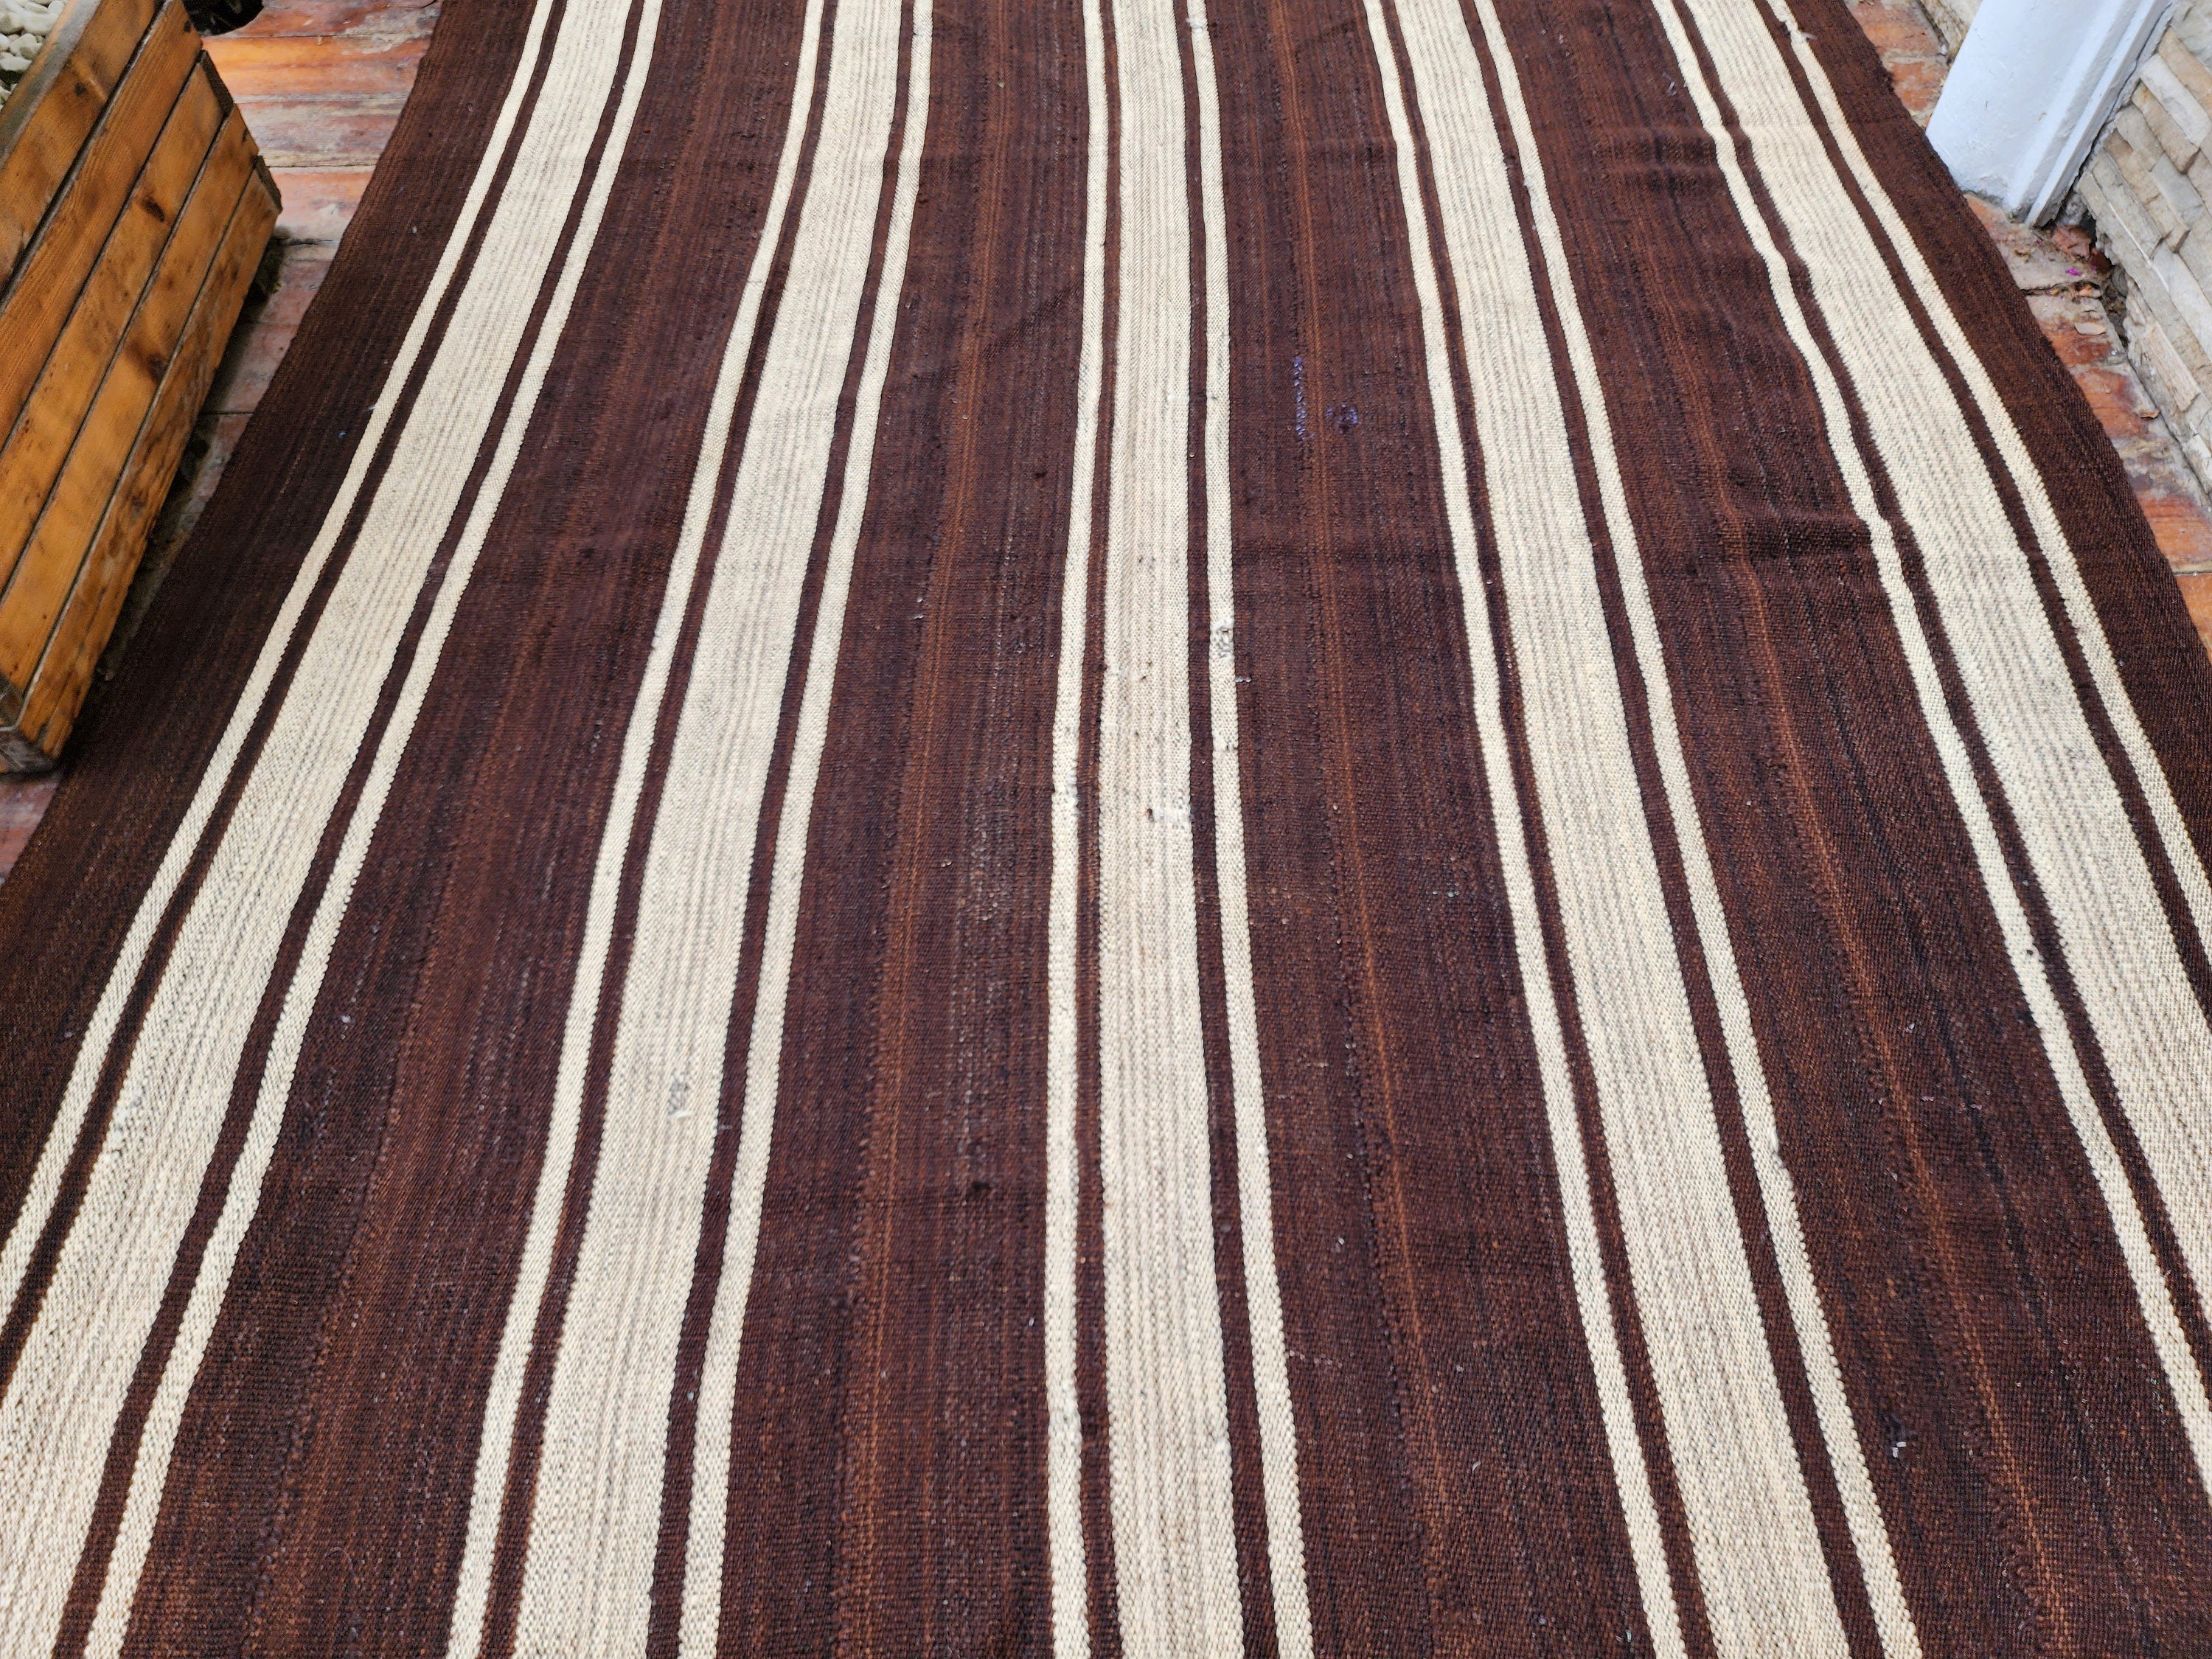 Brown and White Striped Turkish Kilim Rug, 8 x 6 ft Natural Wool Vintage Flatweave Rug for Boho Retro Living Room Decor, Persian Area Rug